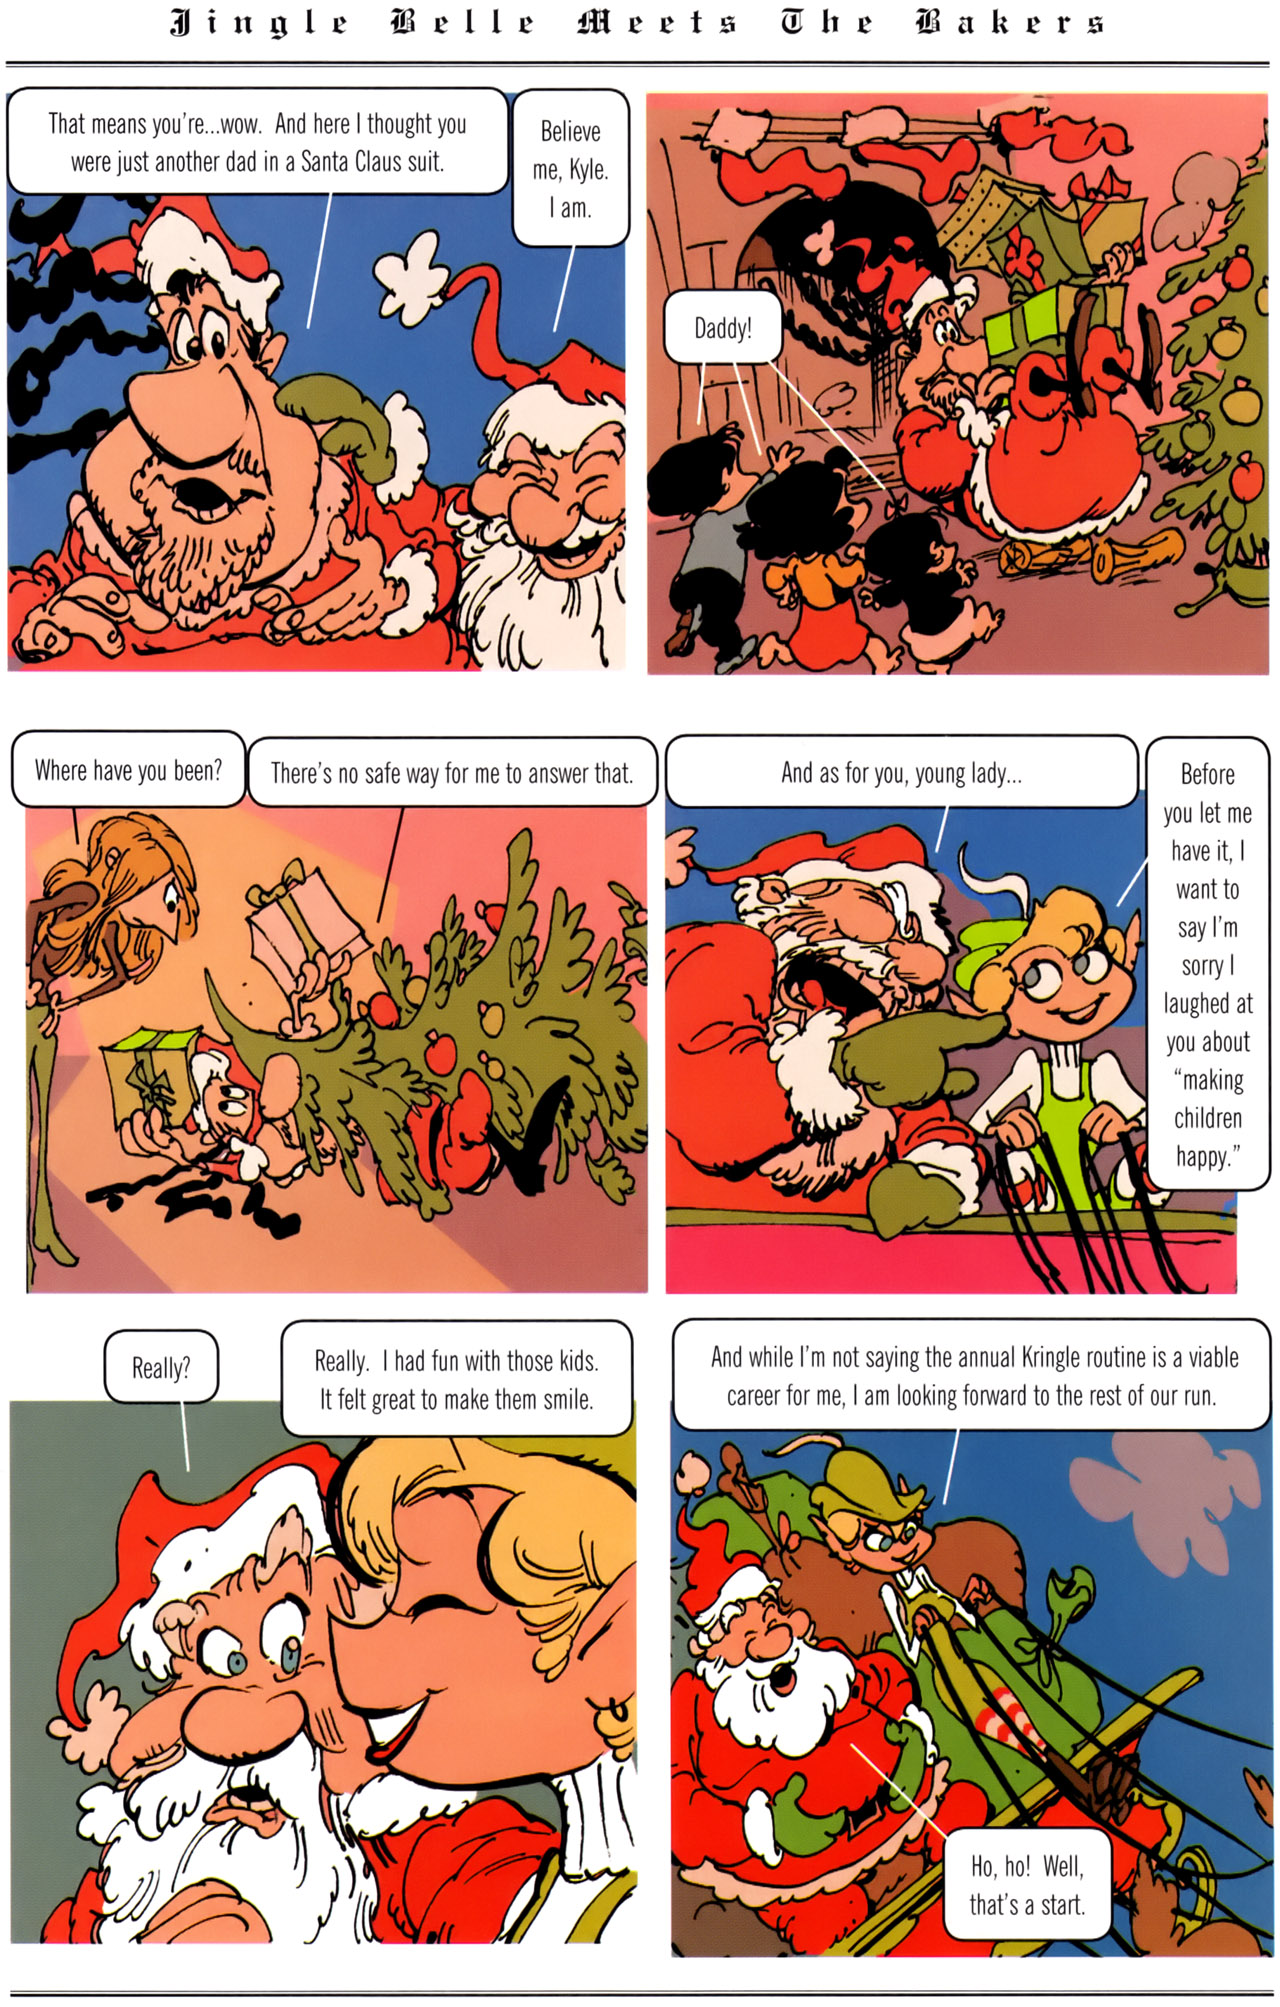 Read online The Bakers Meet Jingle Belle comic -  Issue # Full - 23